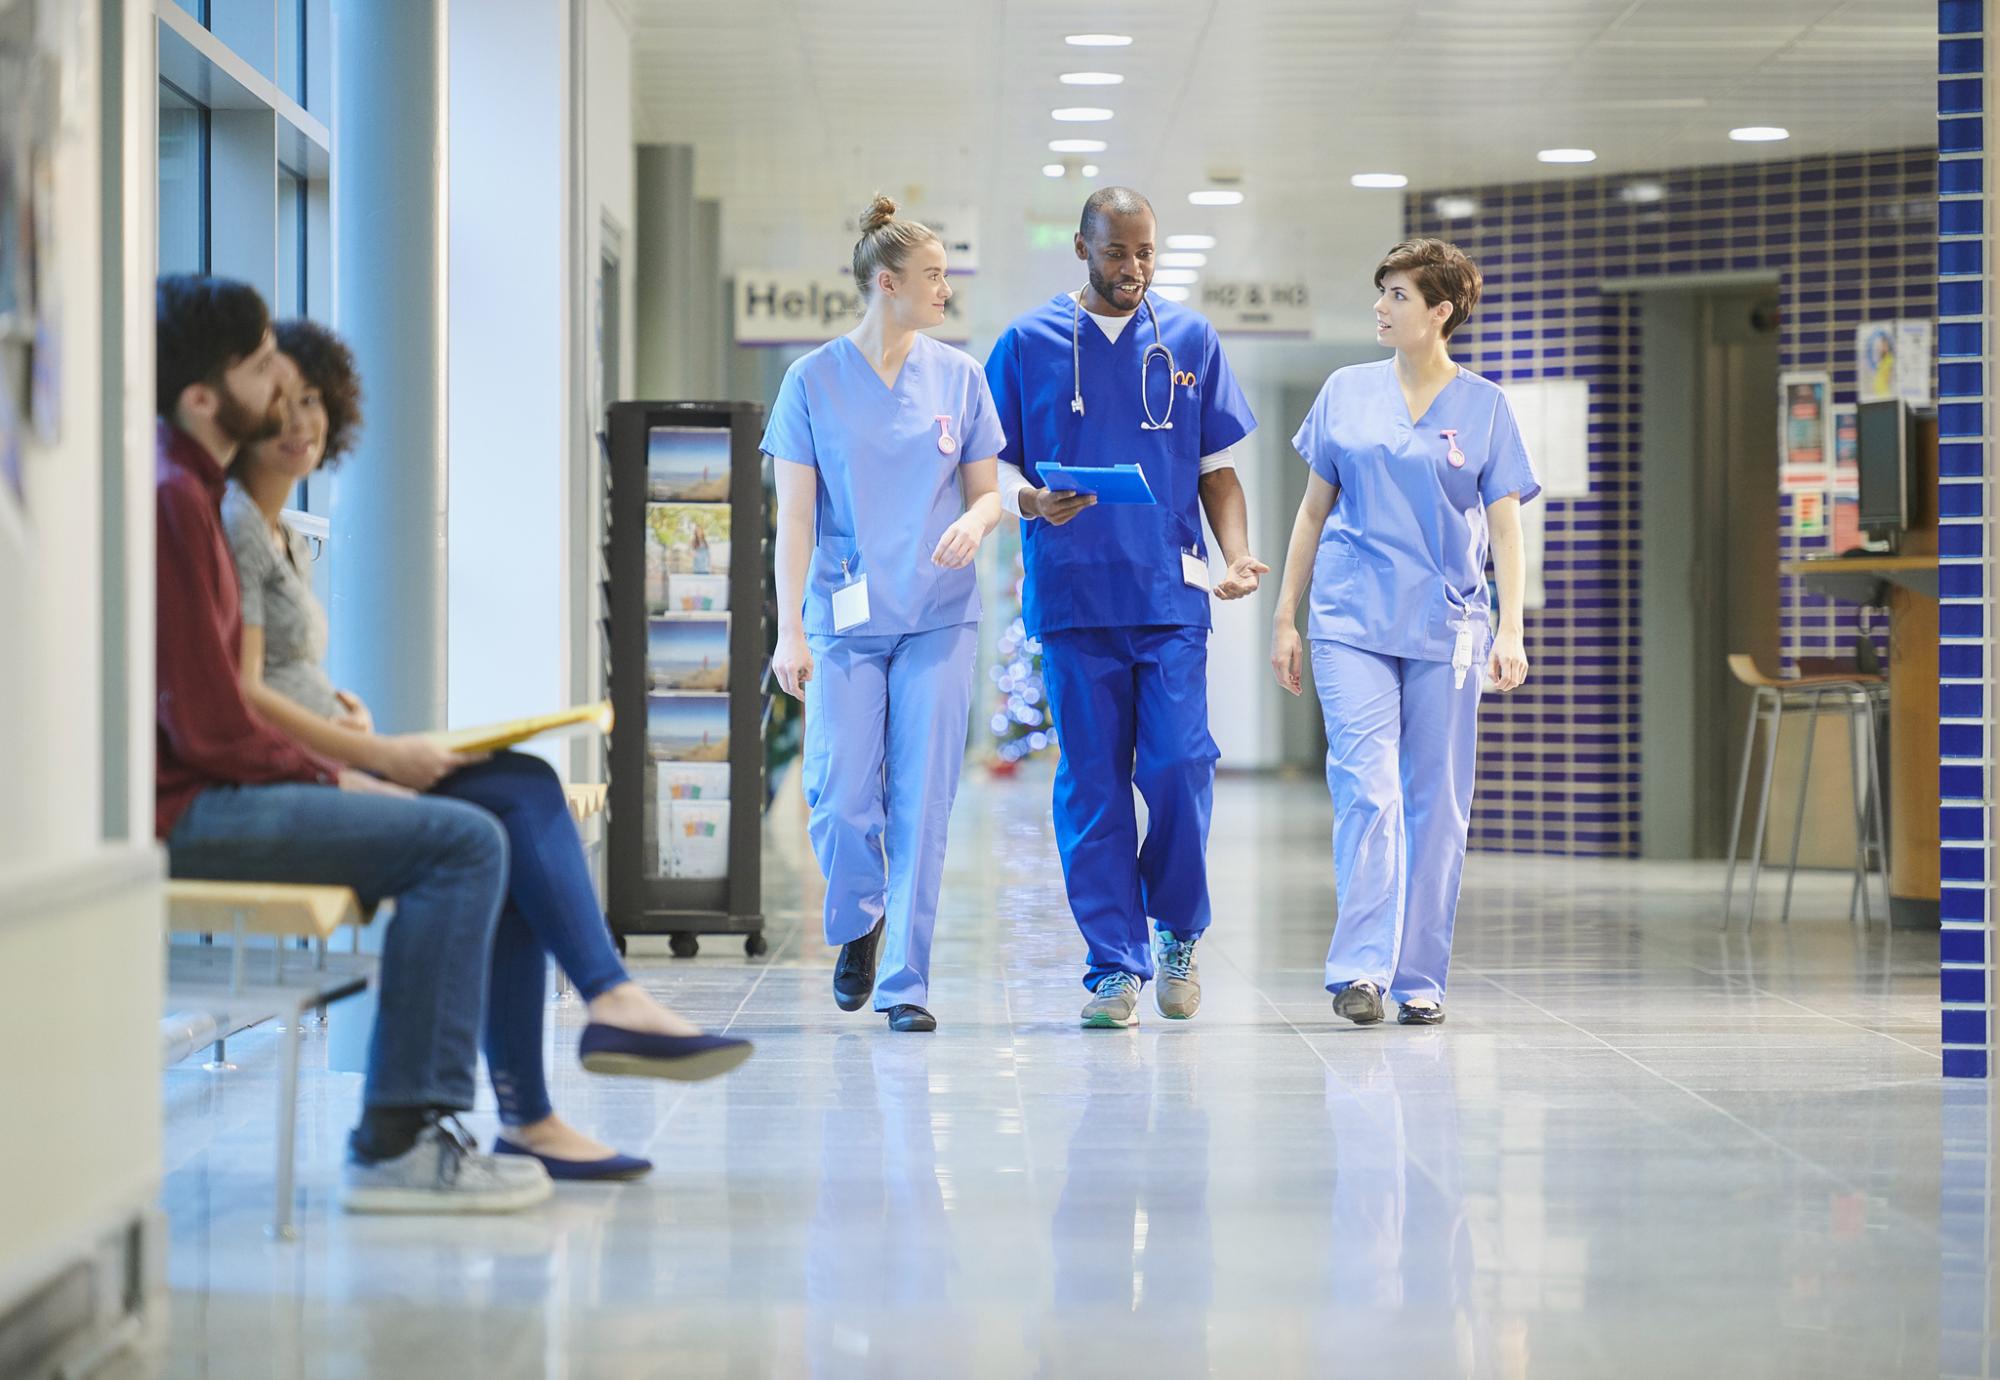 Nurses having a conversation walking through hospital corridors